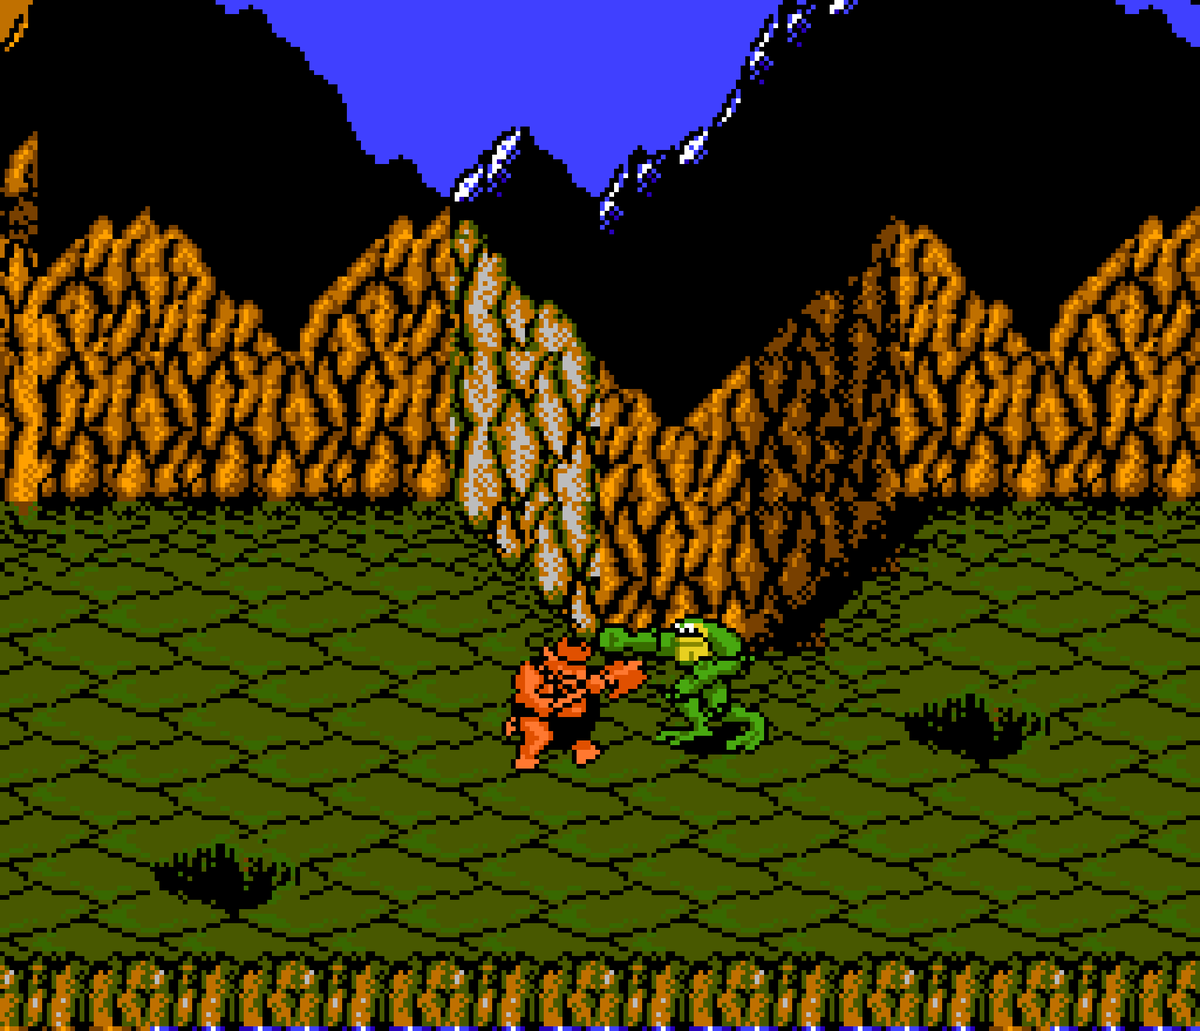 Battletoads dendy. Battletoads Денди. Battletoads 1991. Игра Sega: Battletoads. Battletoads Денди NES.